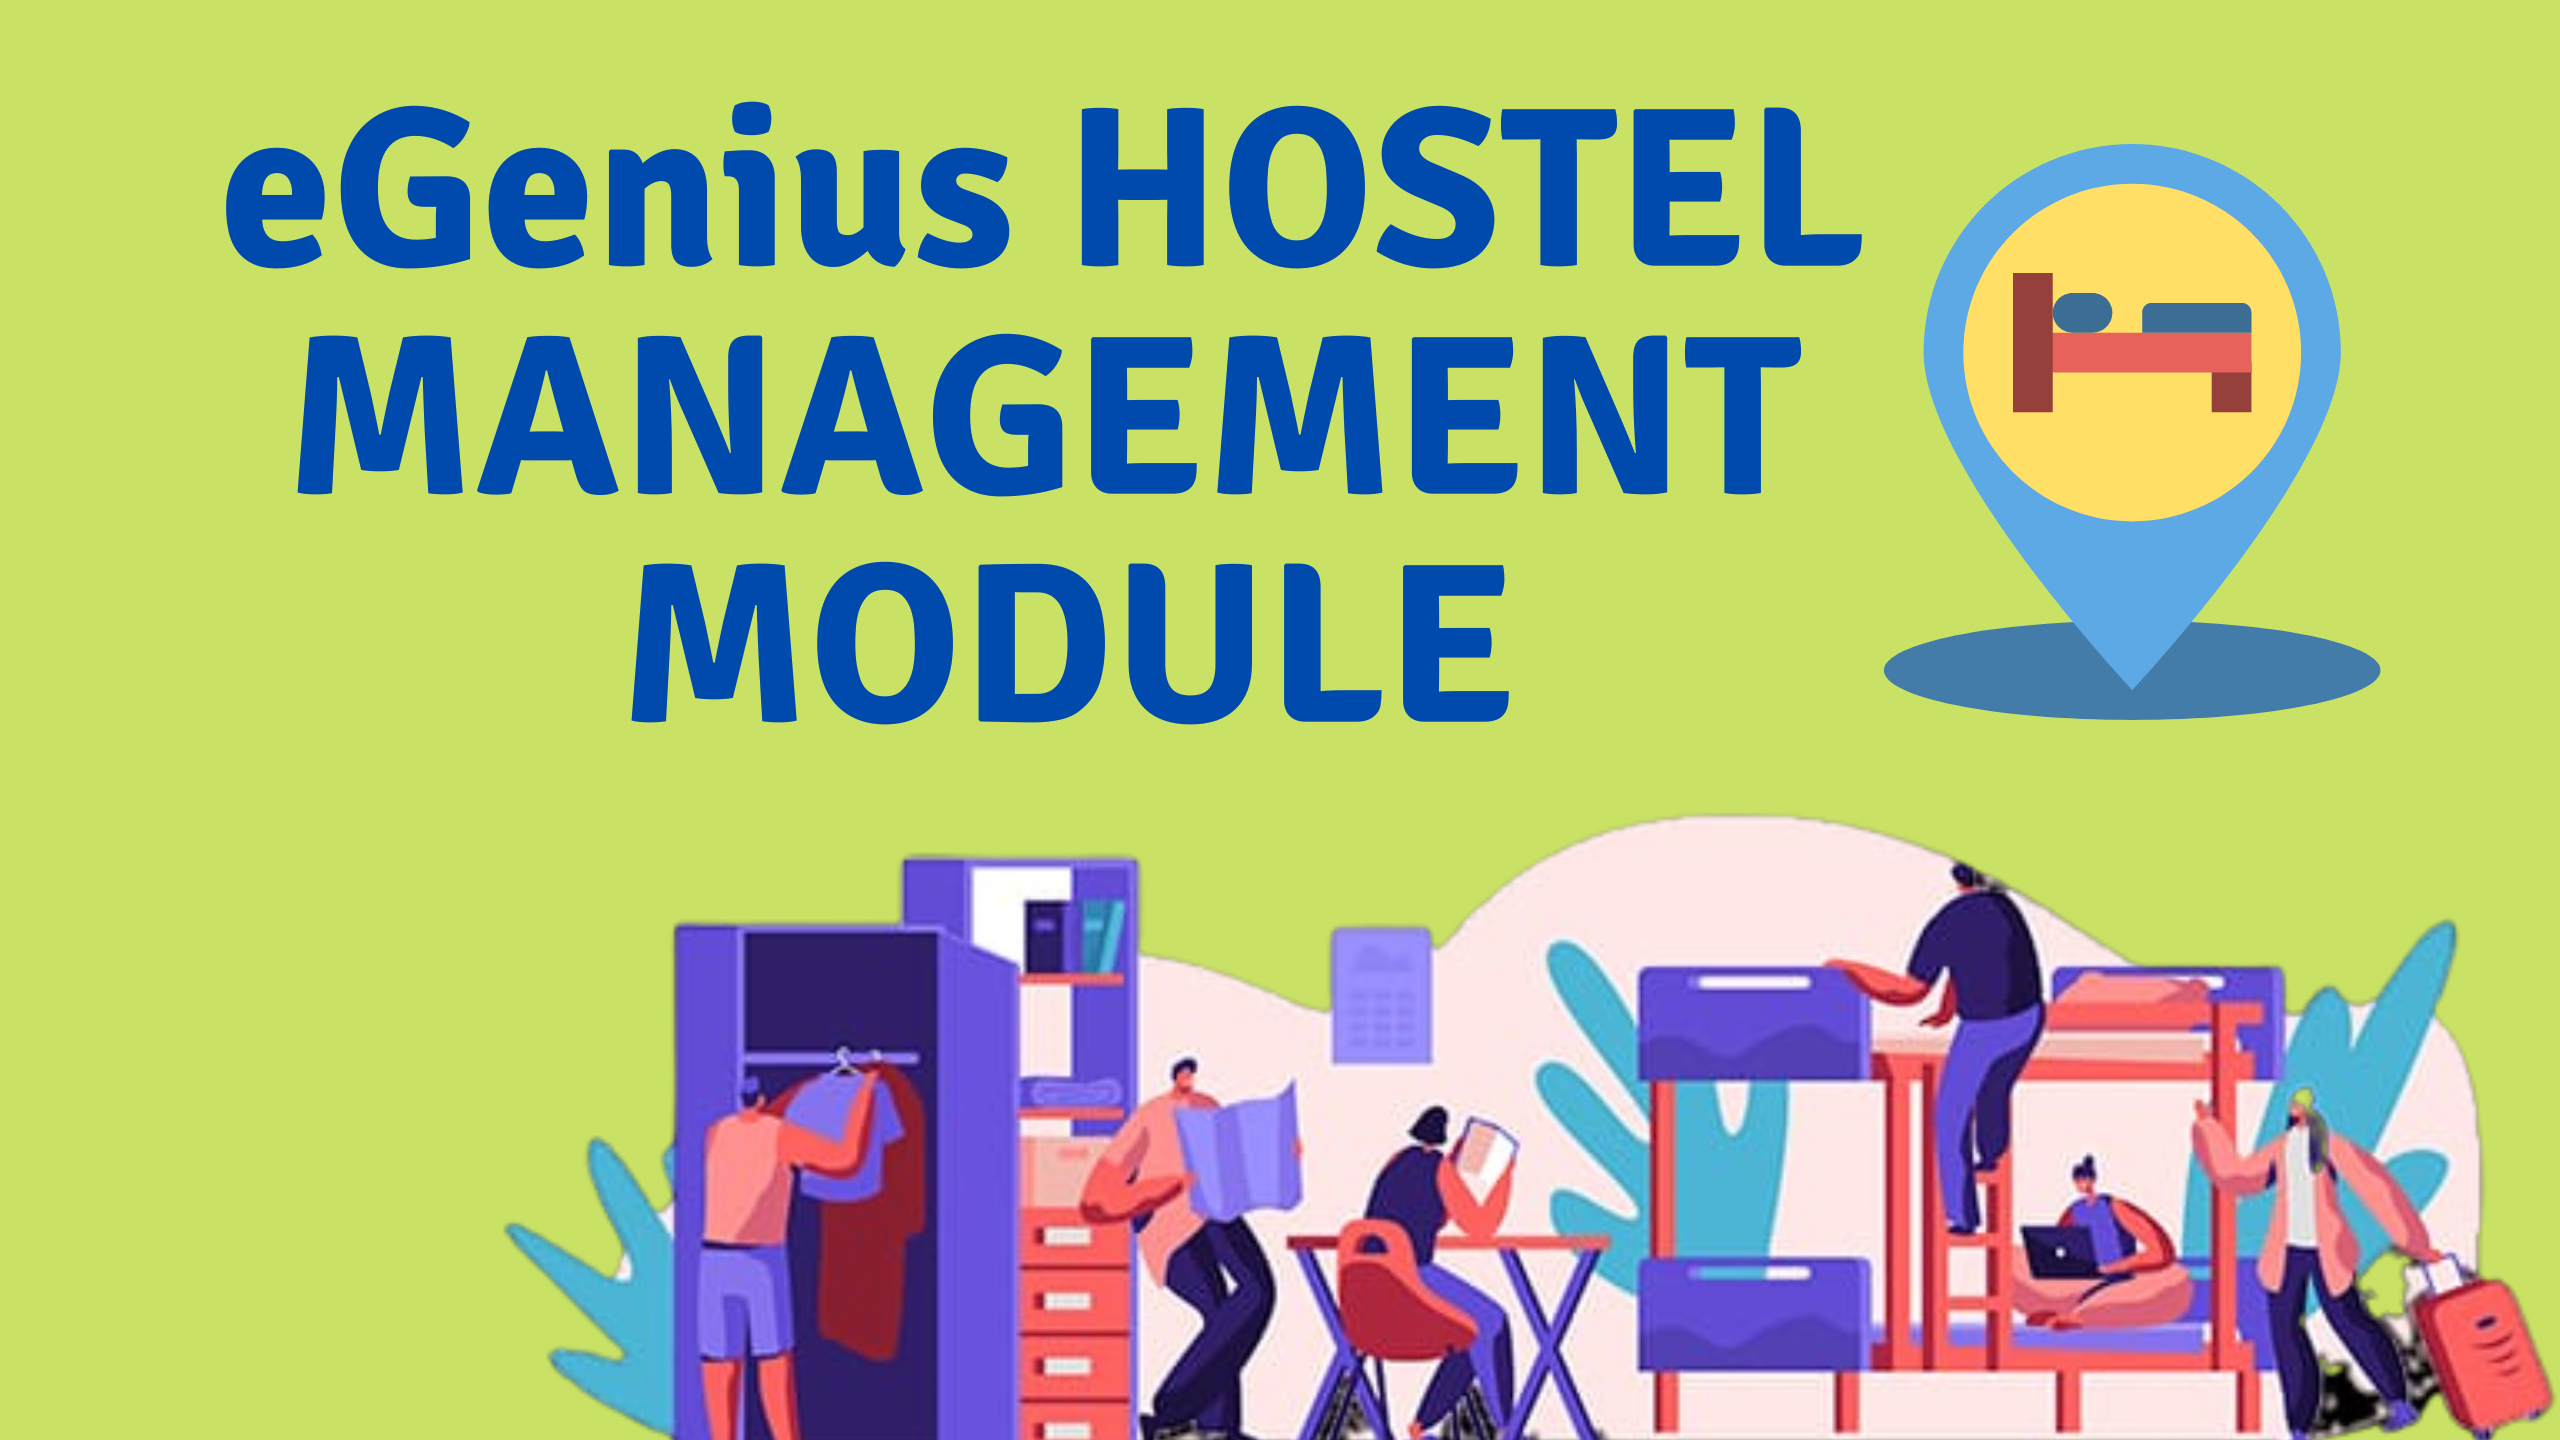 What is the eGenius Hostel Management Module?